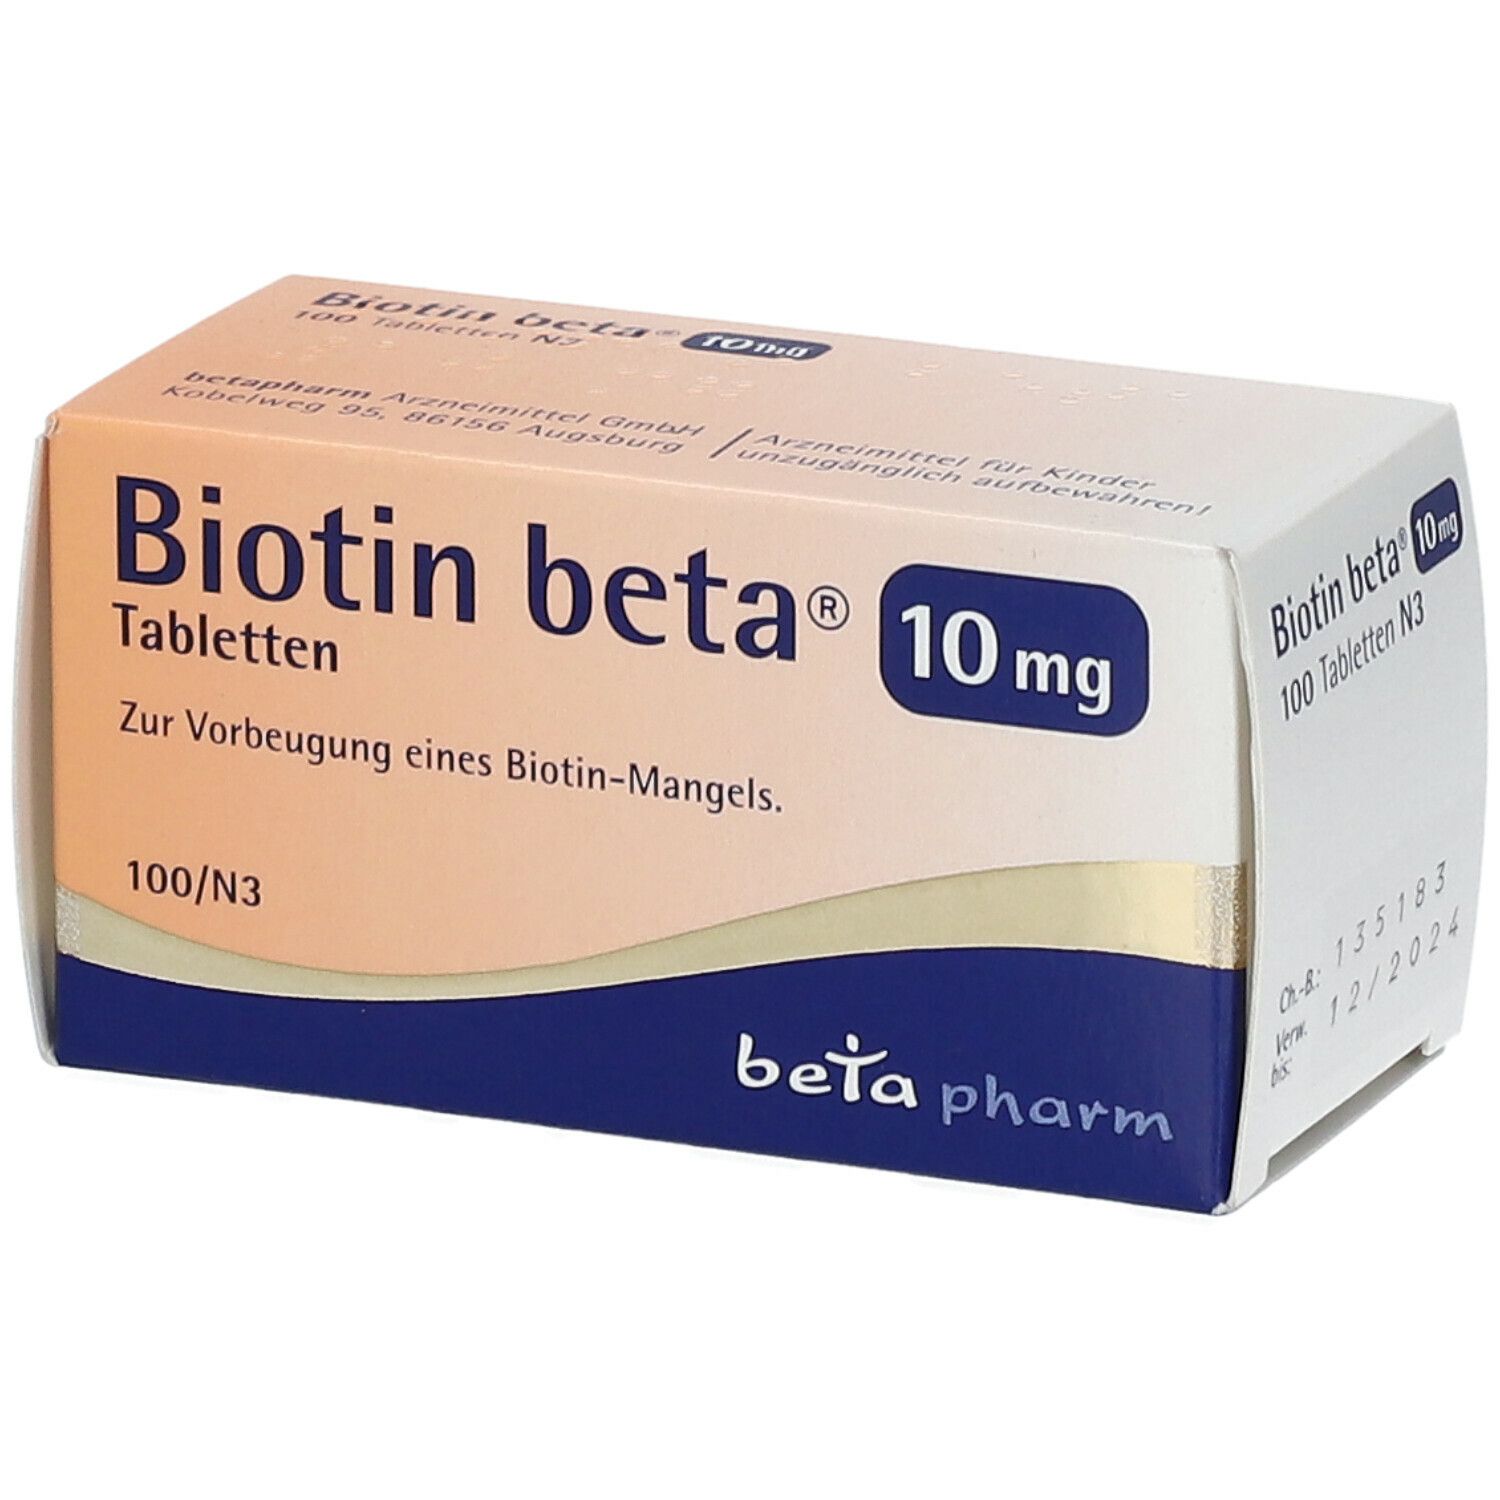 Biotin beta® 10 mg